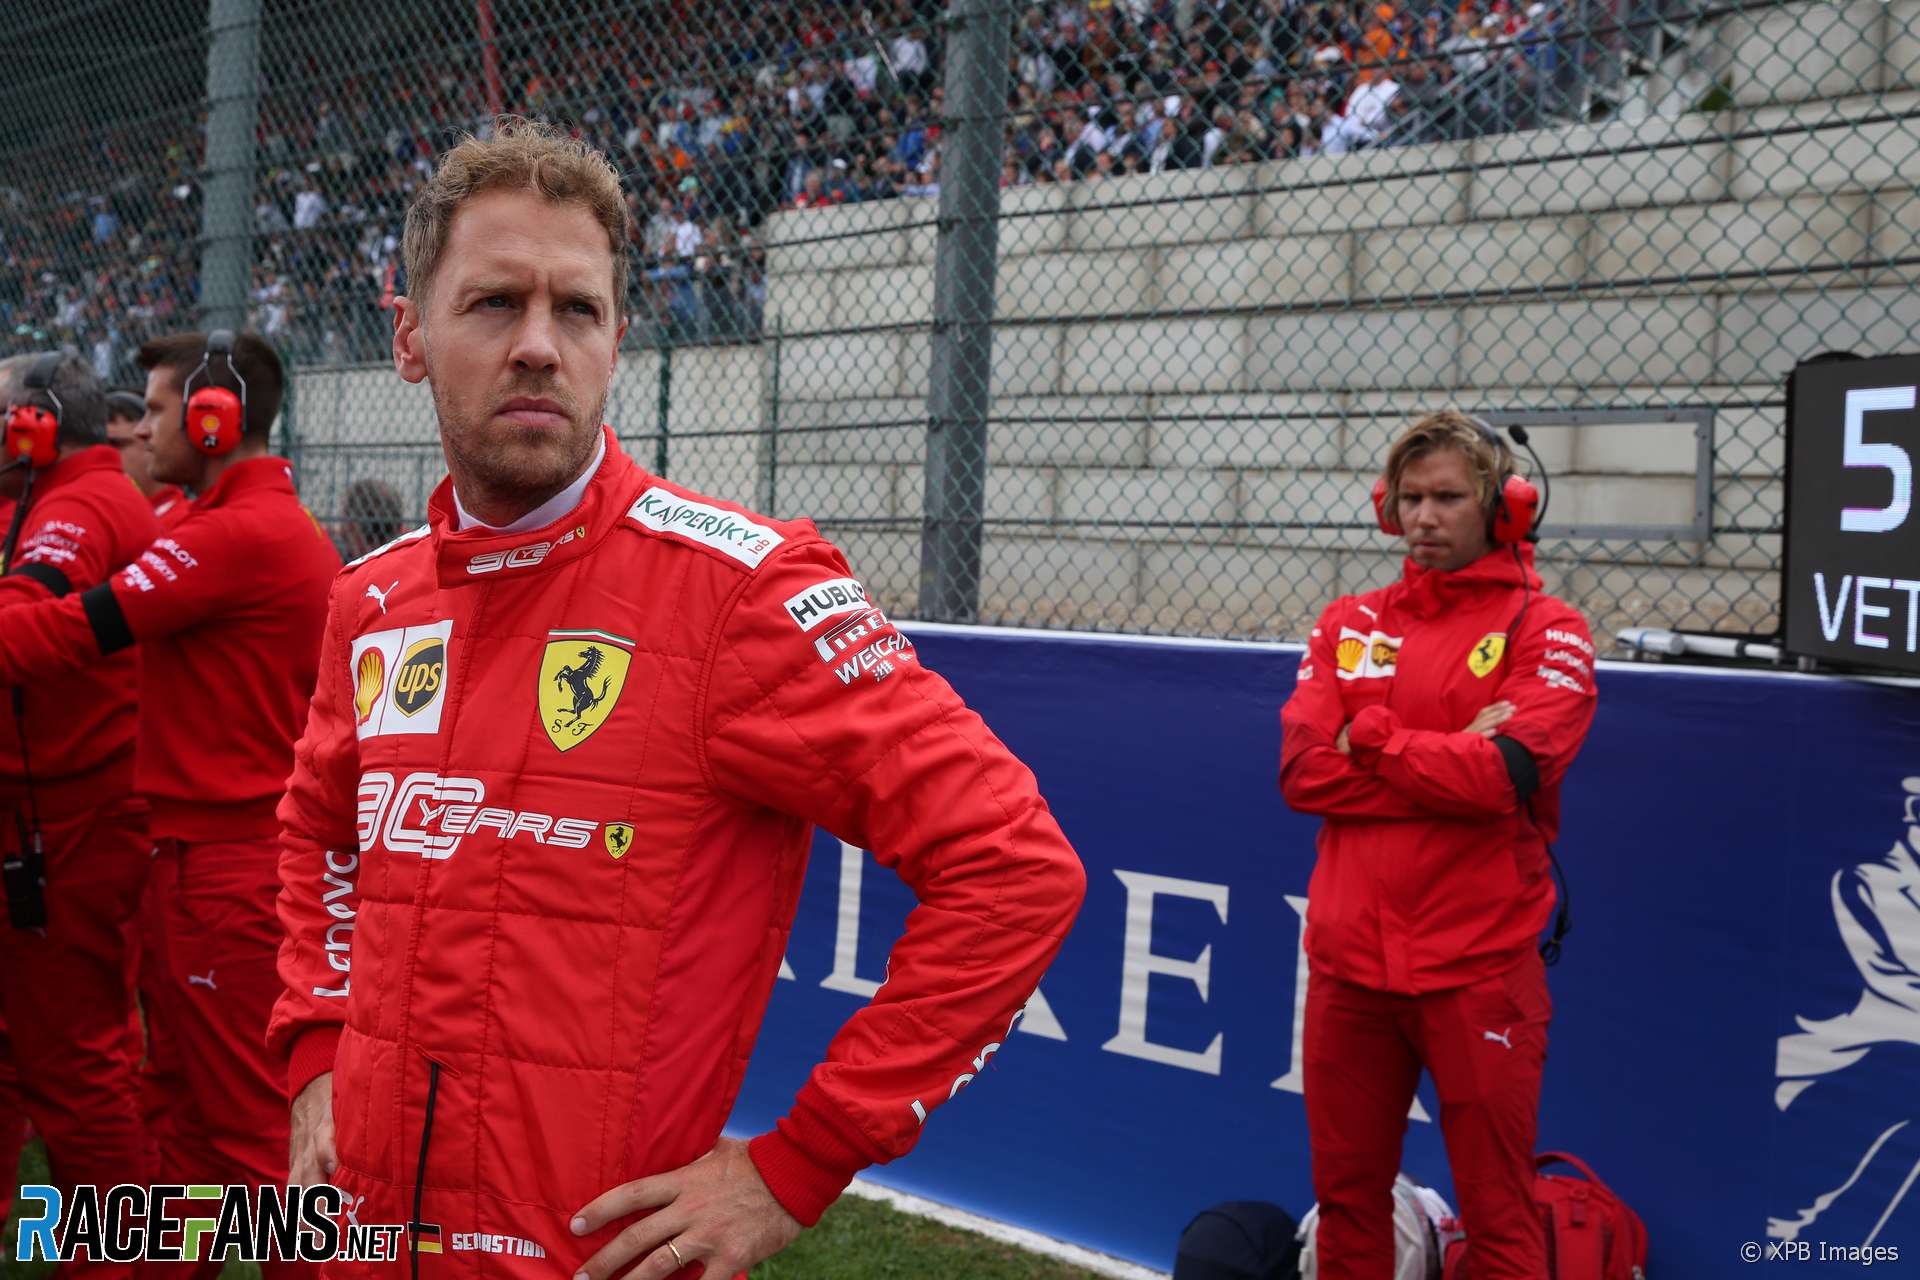 Sebastian Vettel, Spa-Francorchamps, Ferrari, 2019